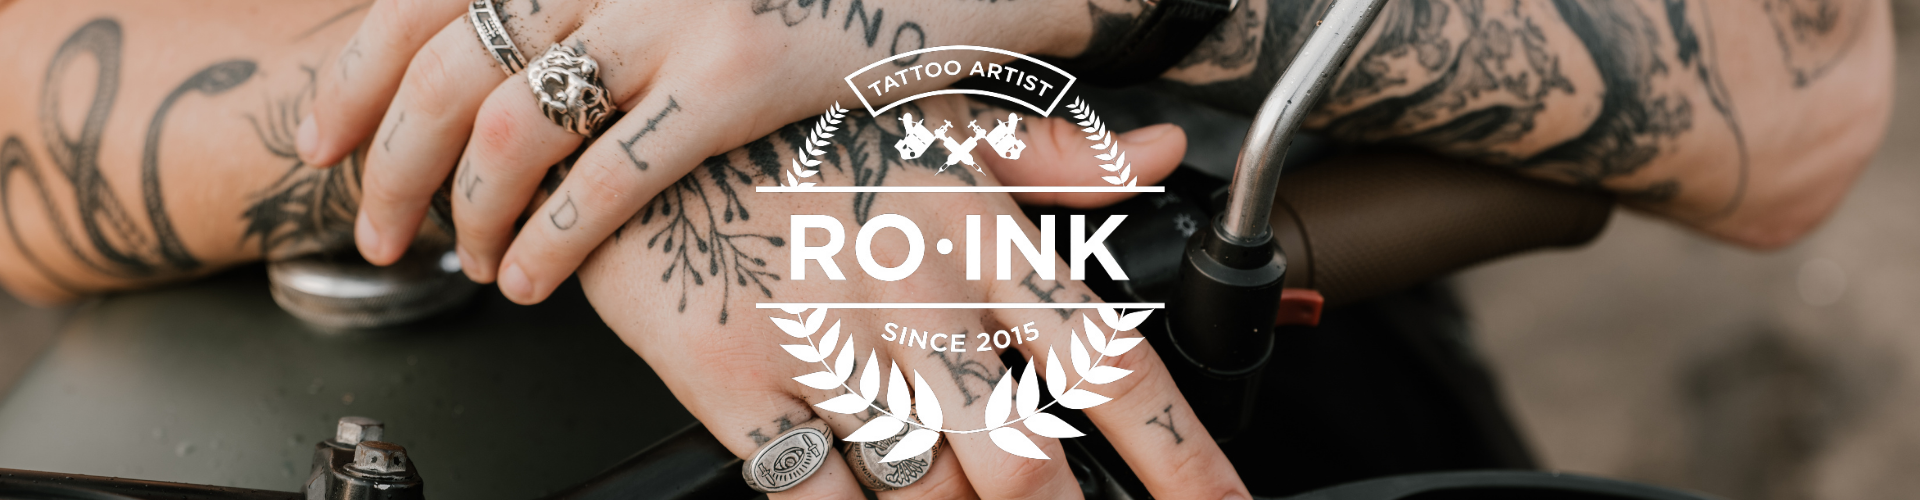 over ro ink tattooshop